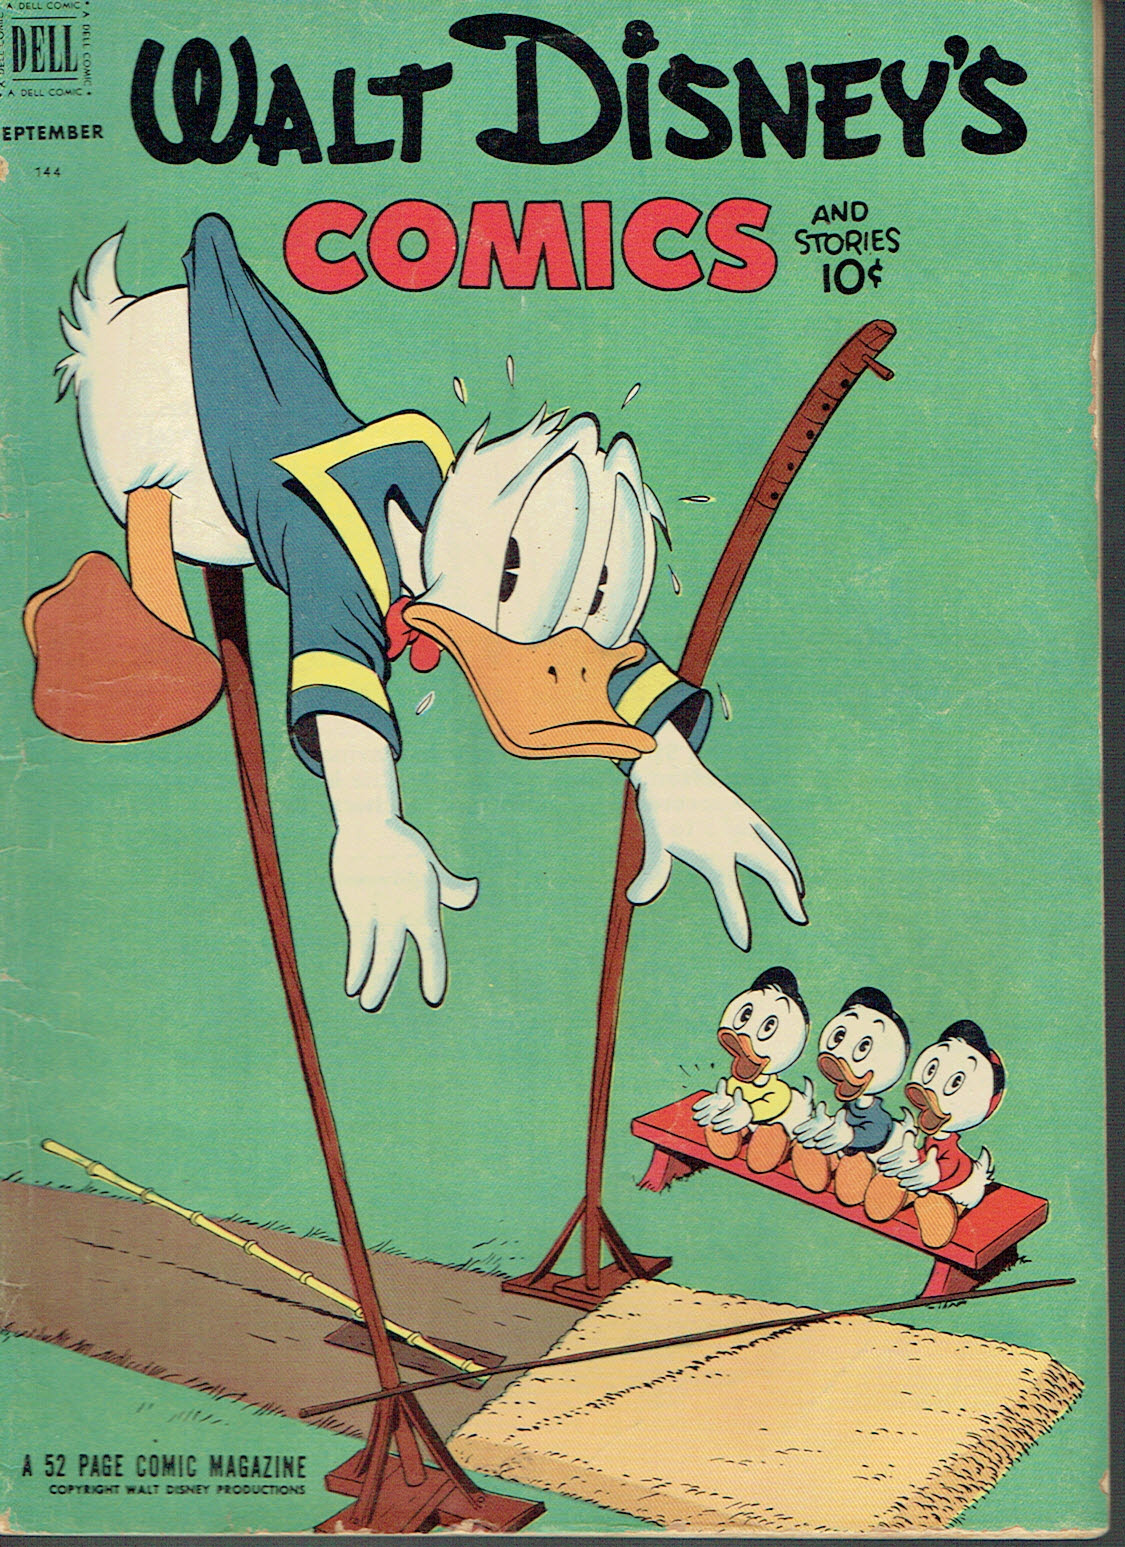 Walt Disneys Comics & Stories #144